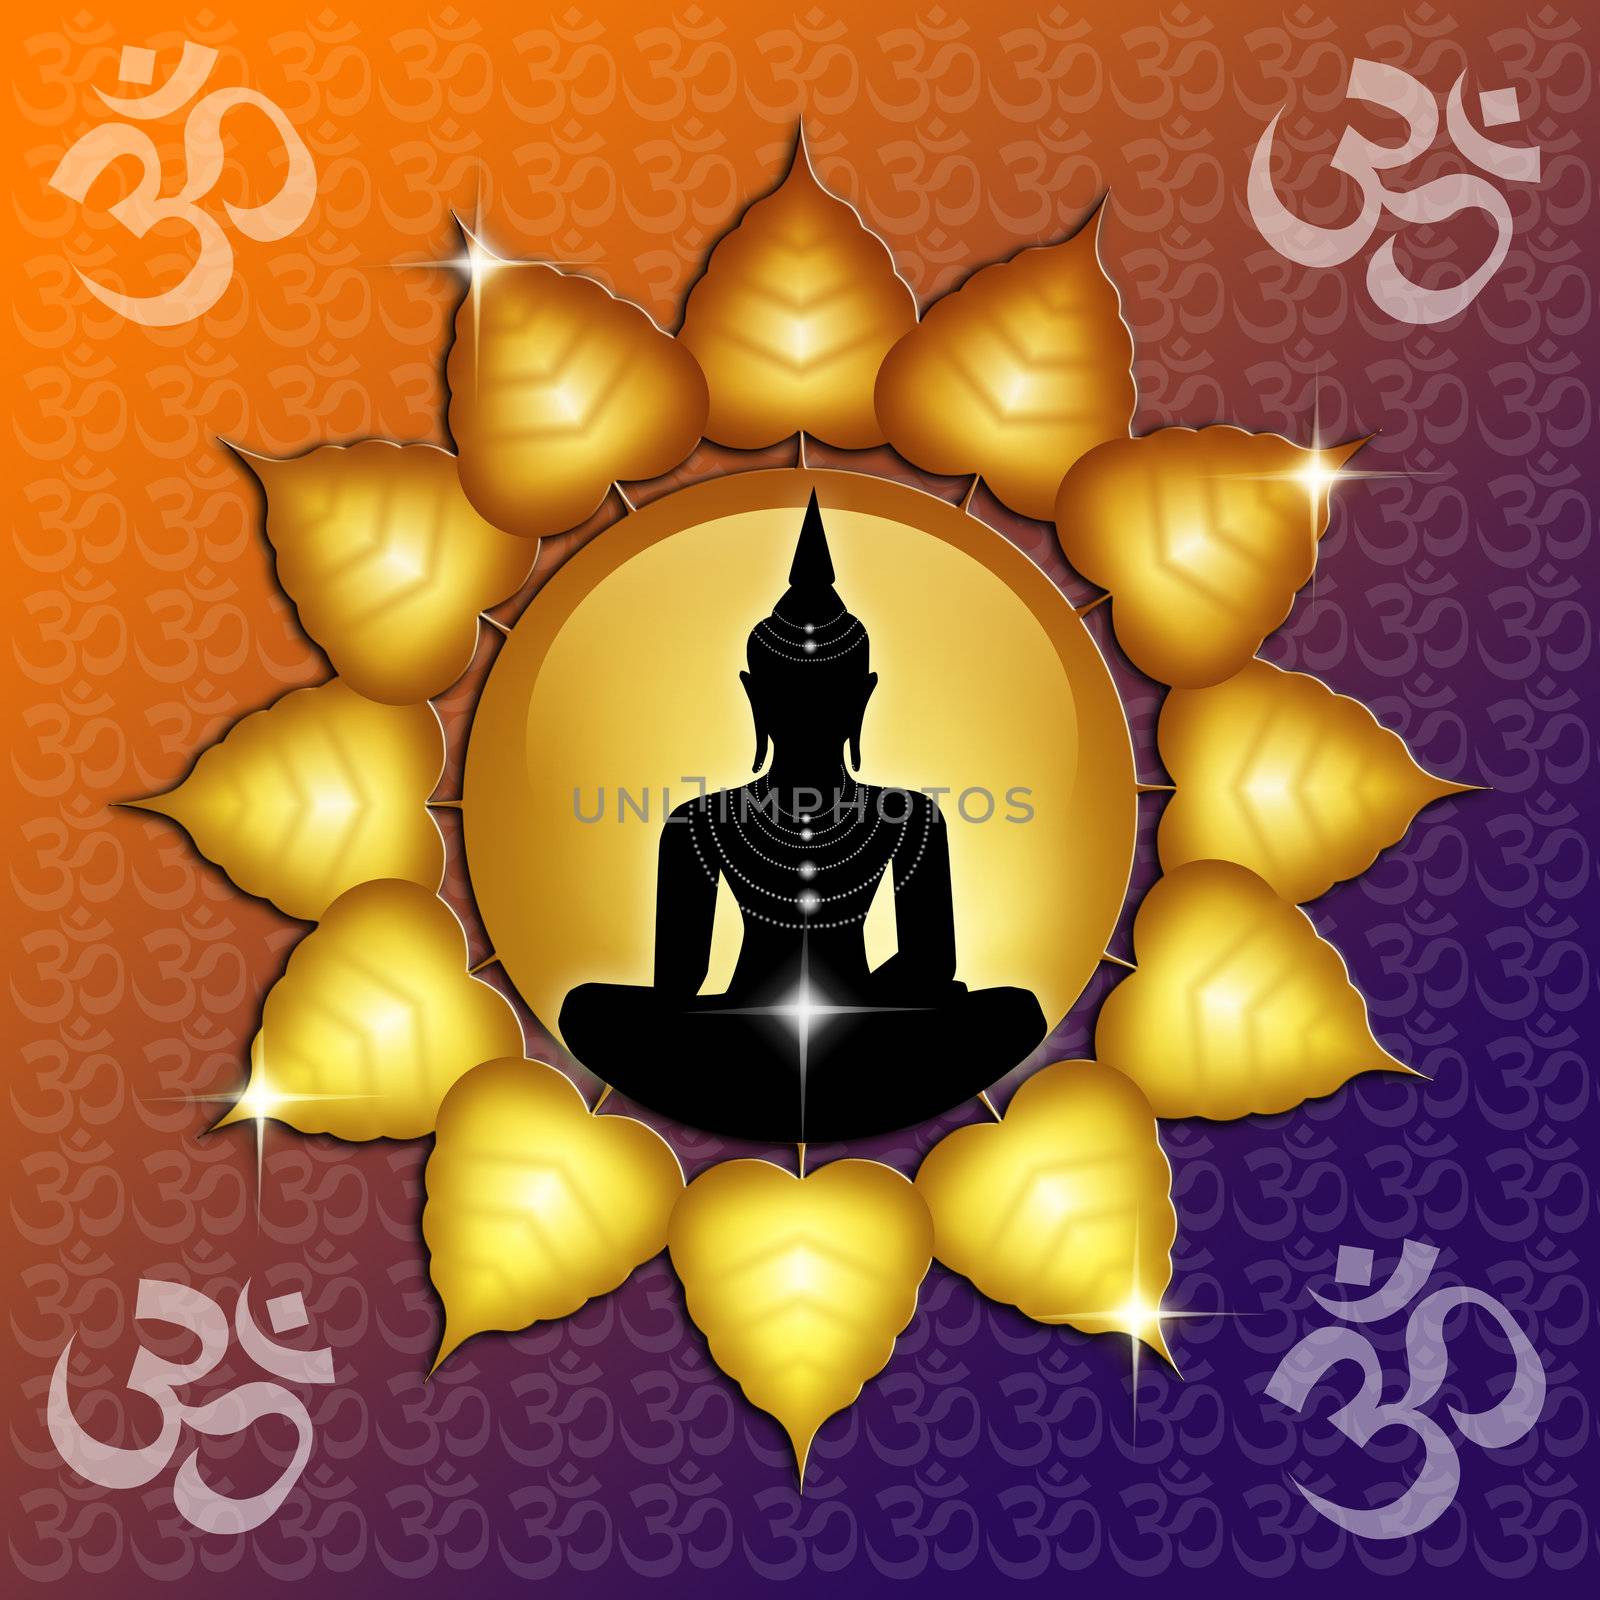 Om symbol and Buddha by sognolucido